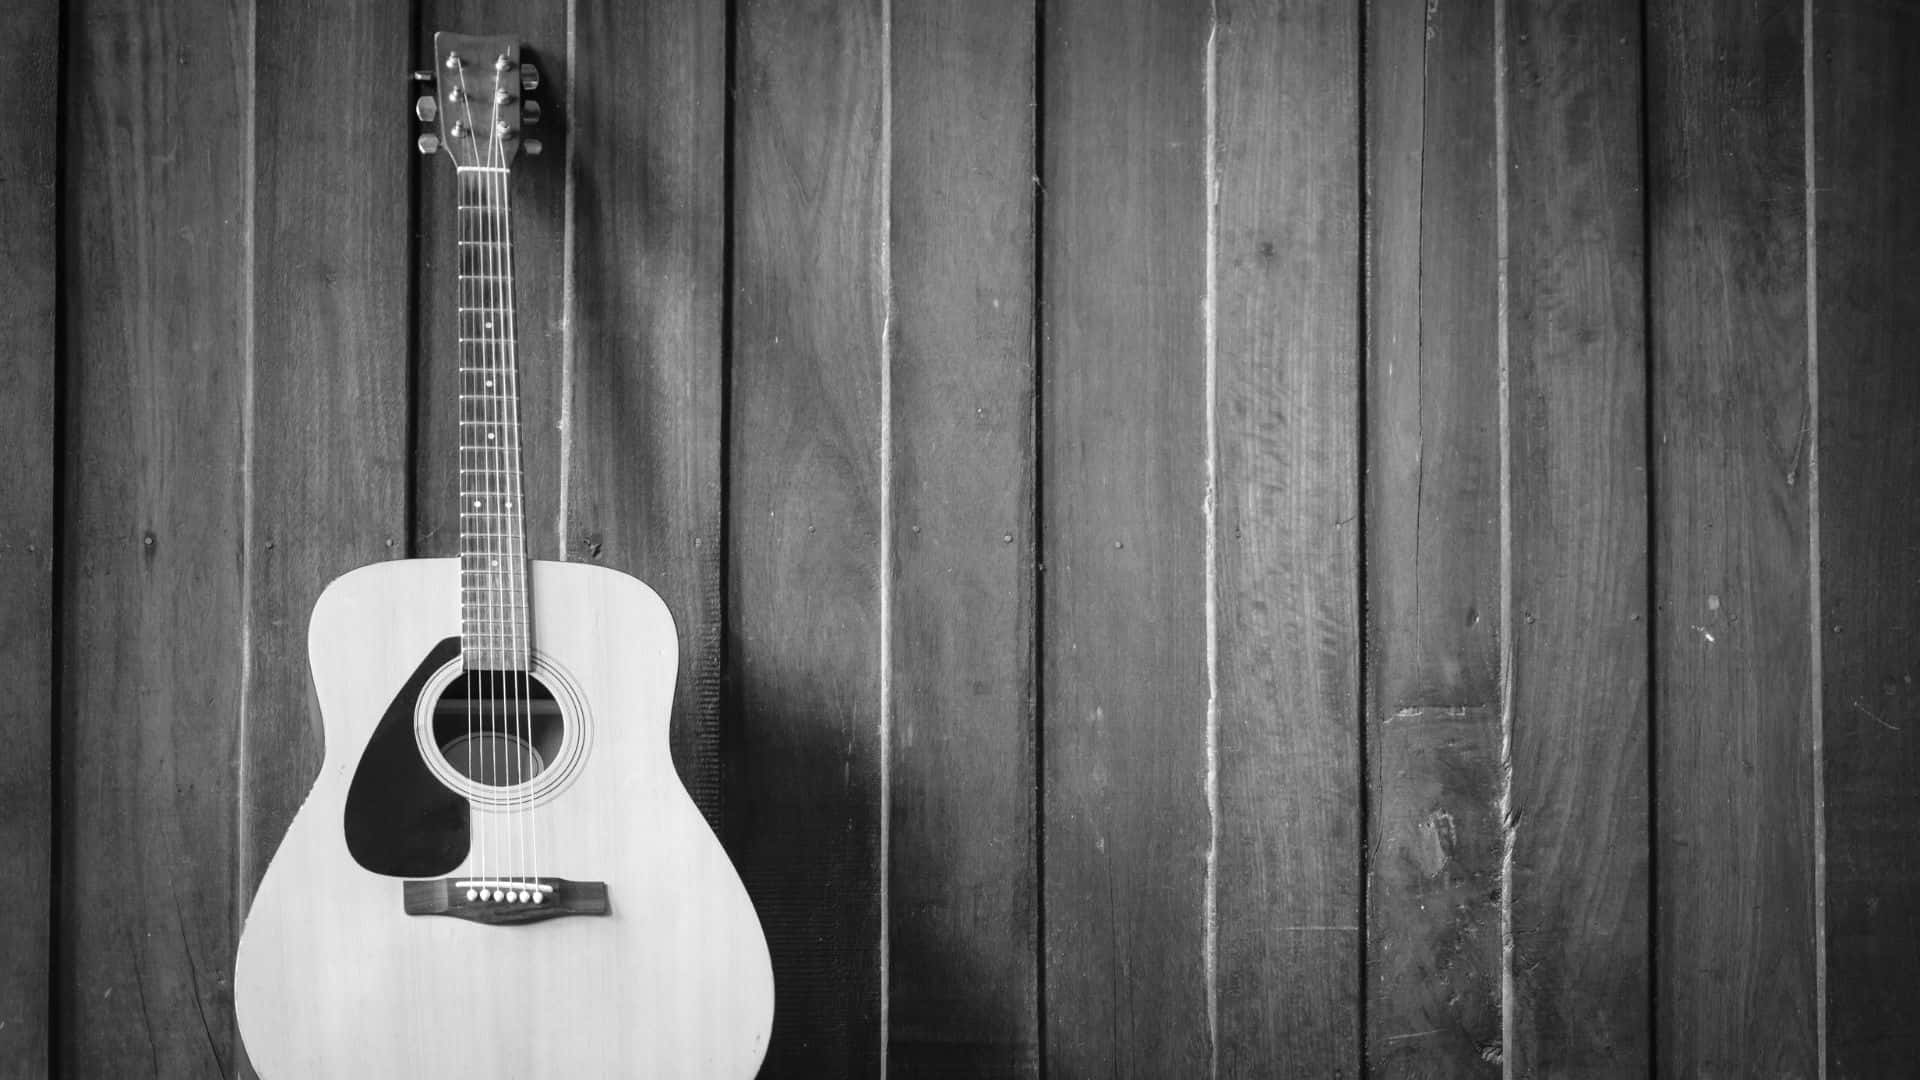 Guitarraacústica En Blanco Y Negro Sobre Un Fondo En Escala De Grises. Fondo de pantalla